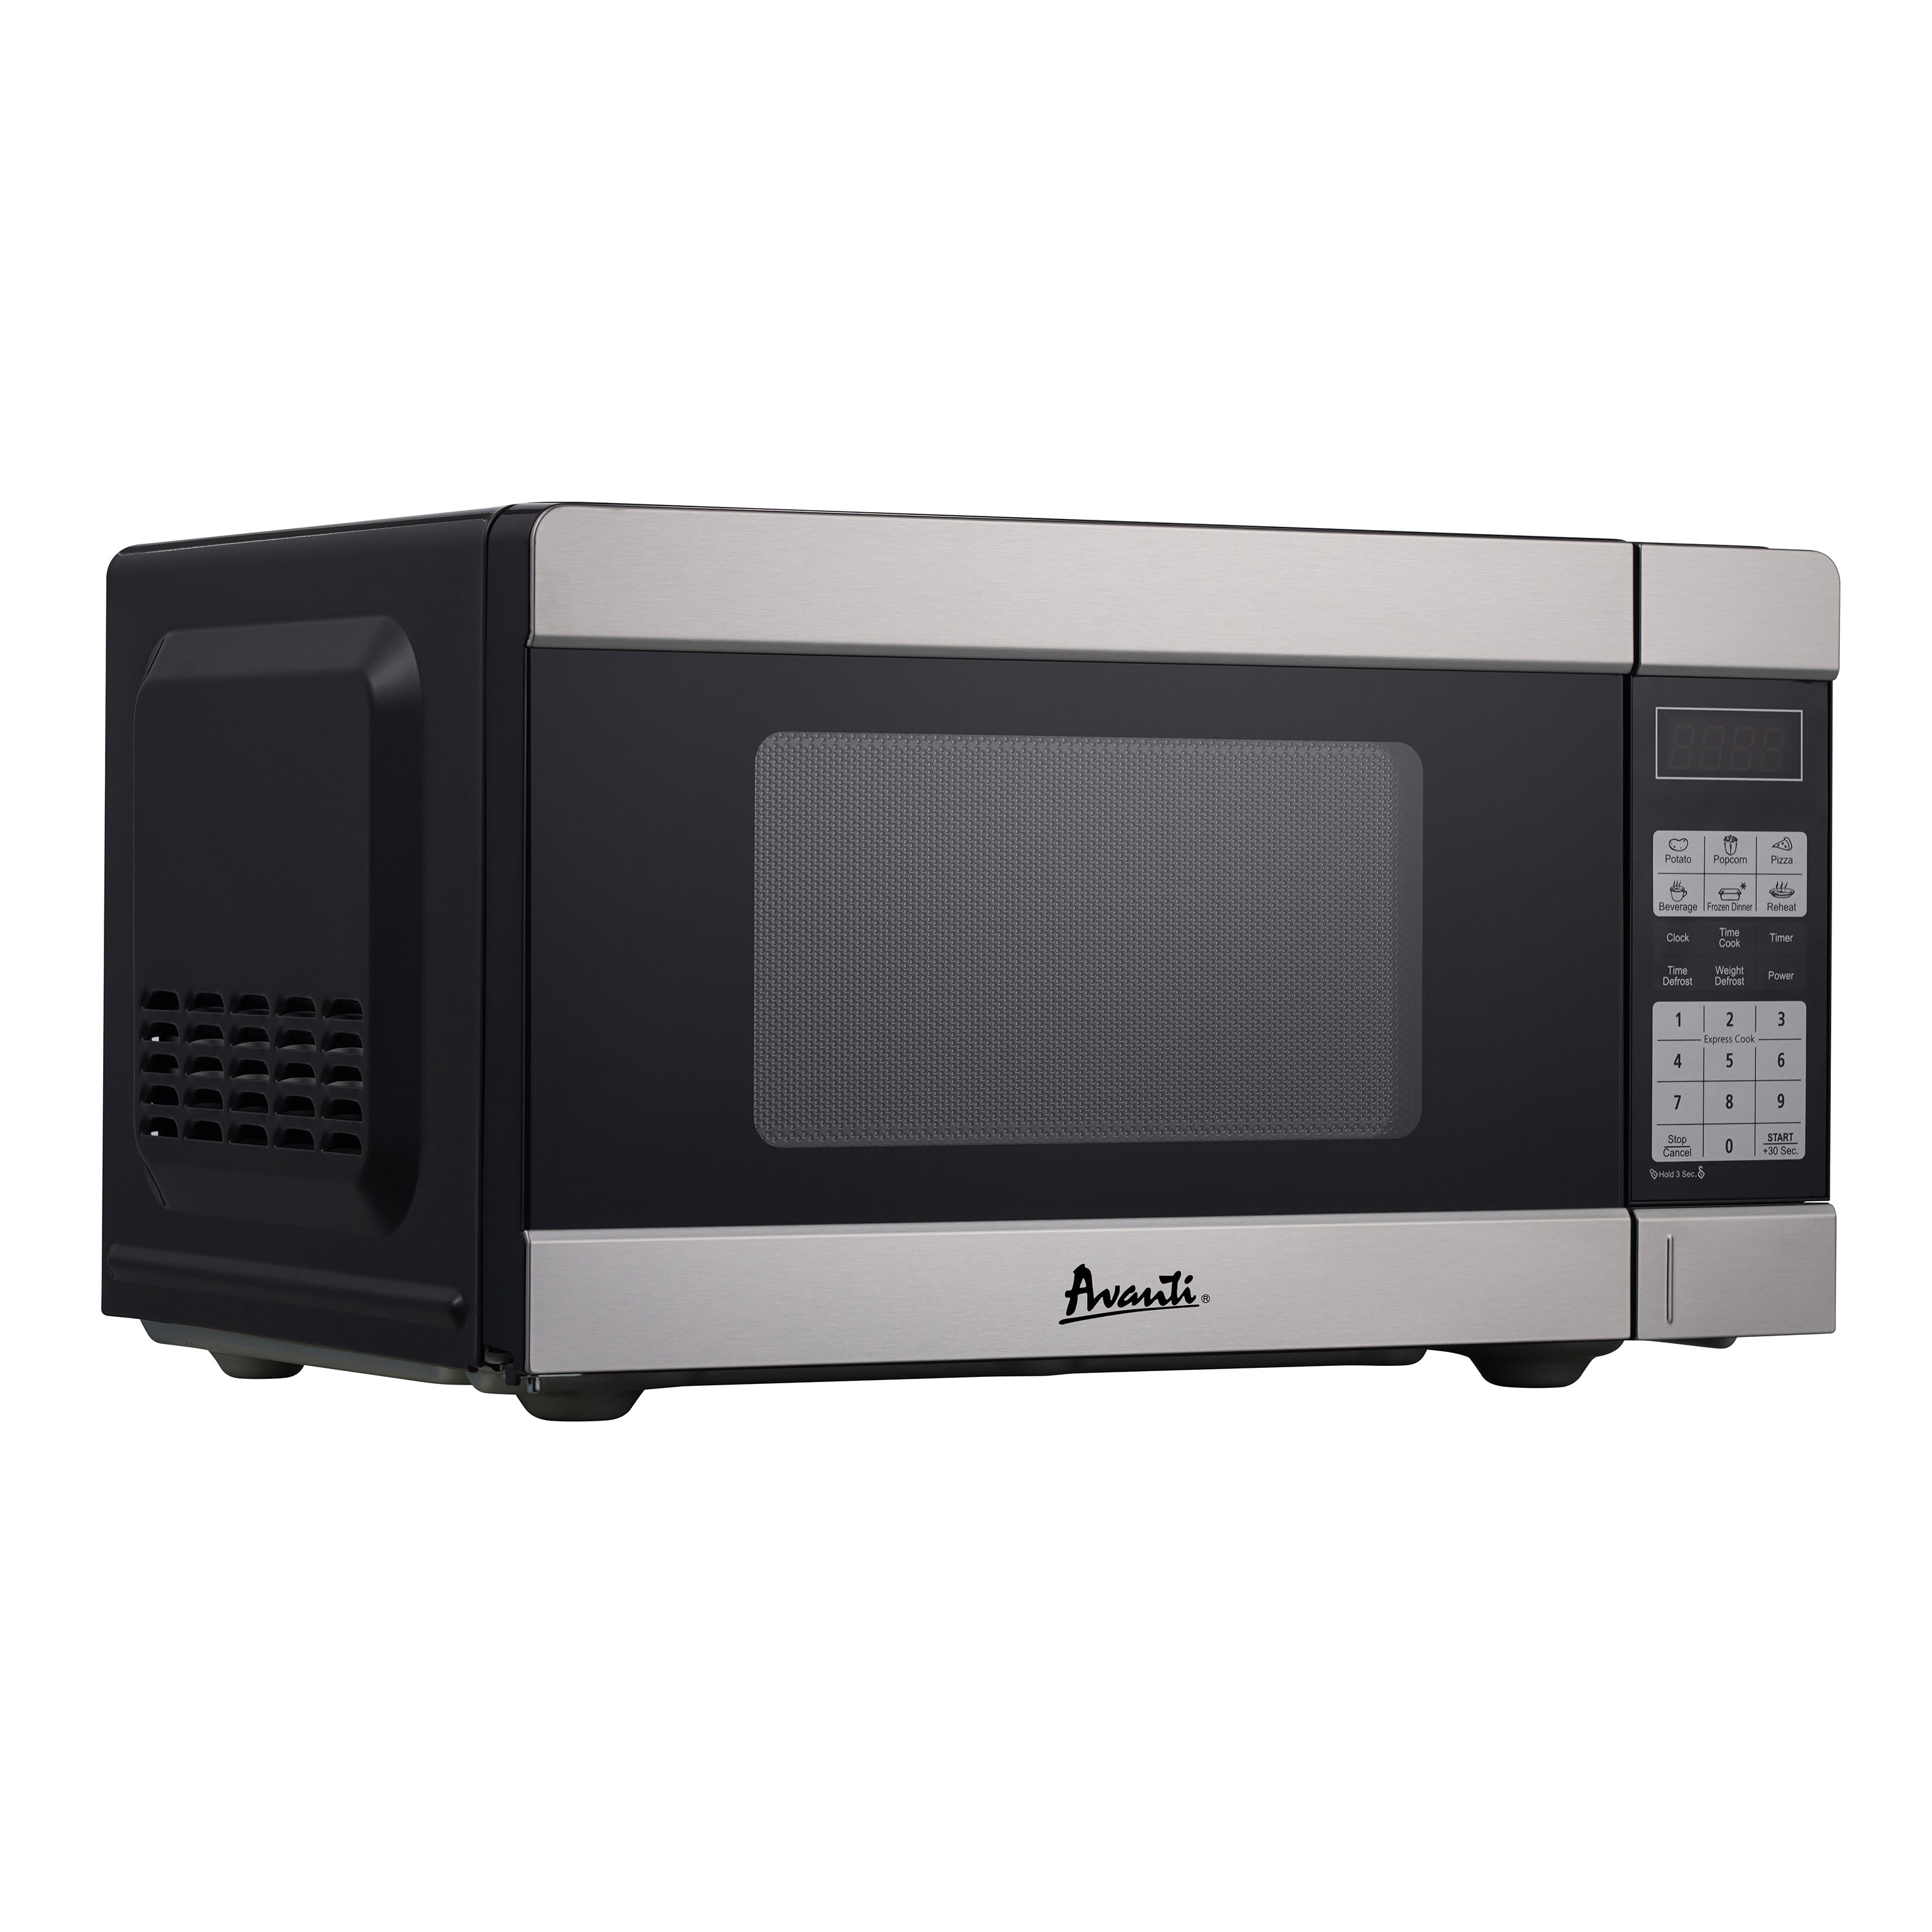 Avanti - MT91K3S, Avanti 0.9 cu. ft. Microwave Oven, in Stainless Steel